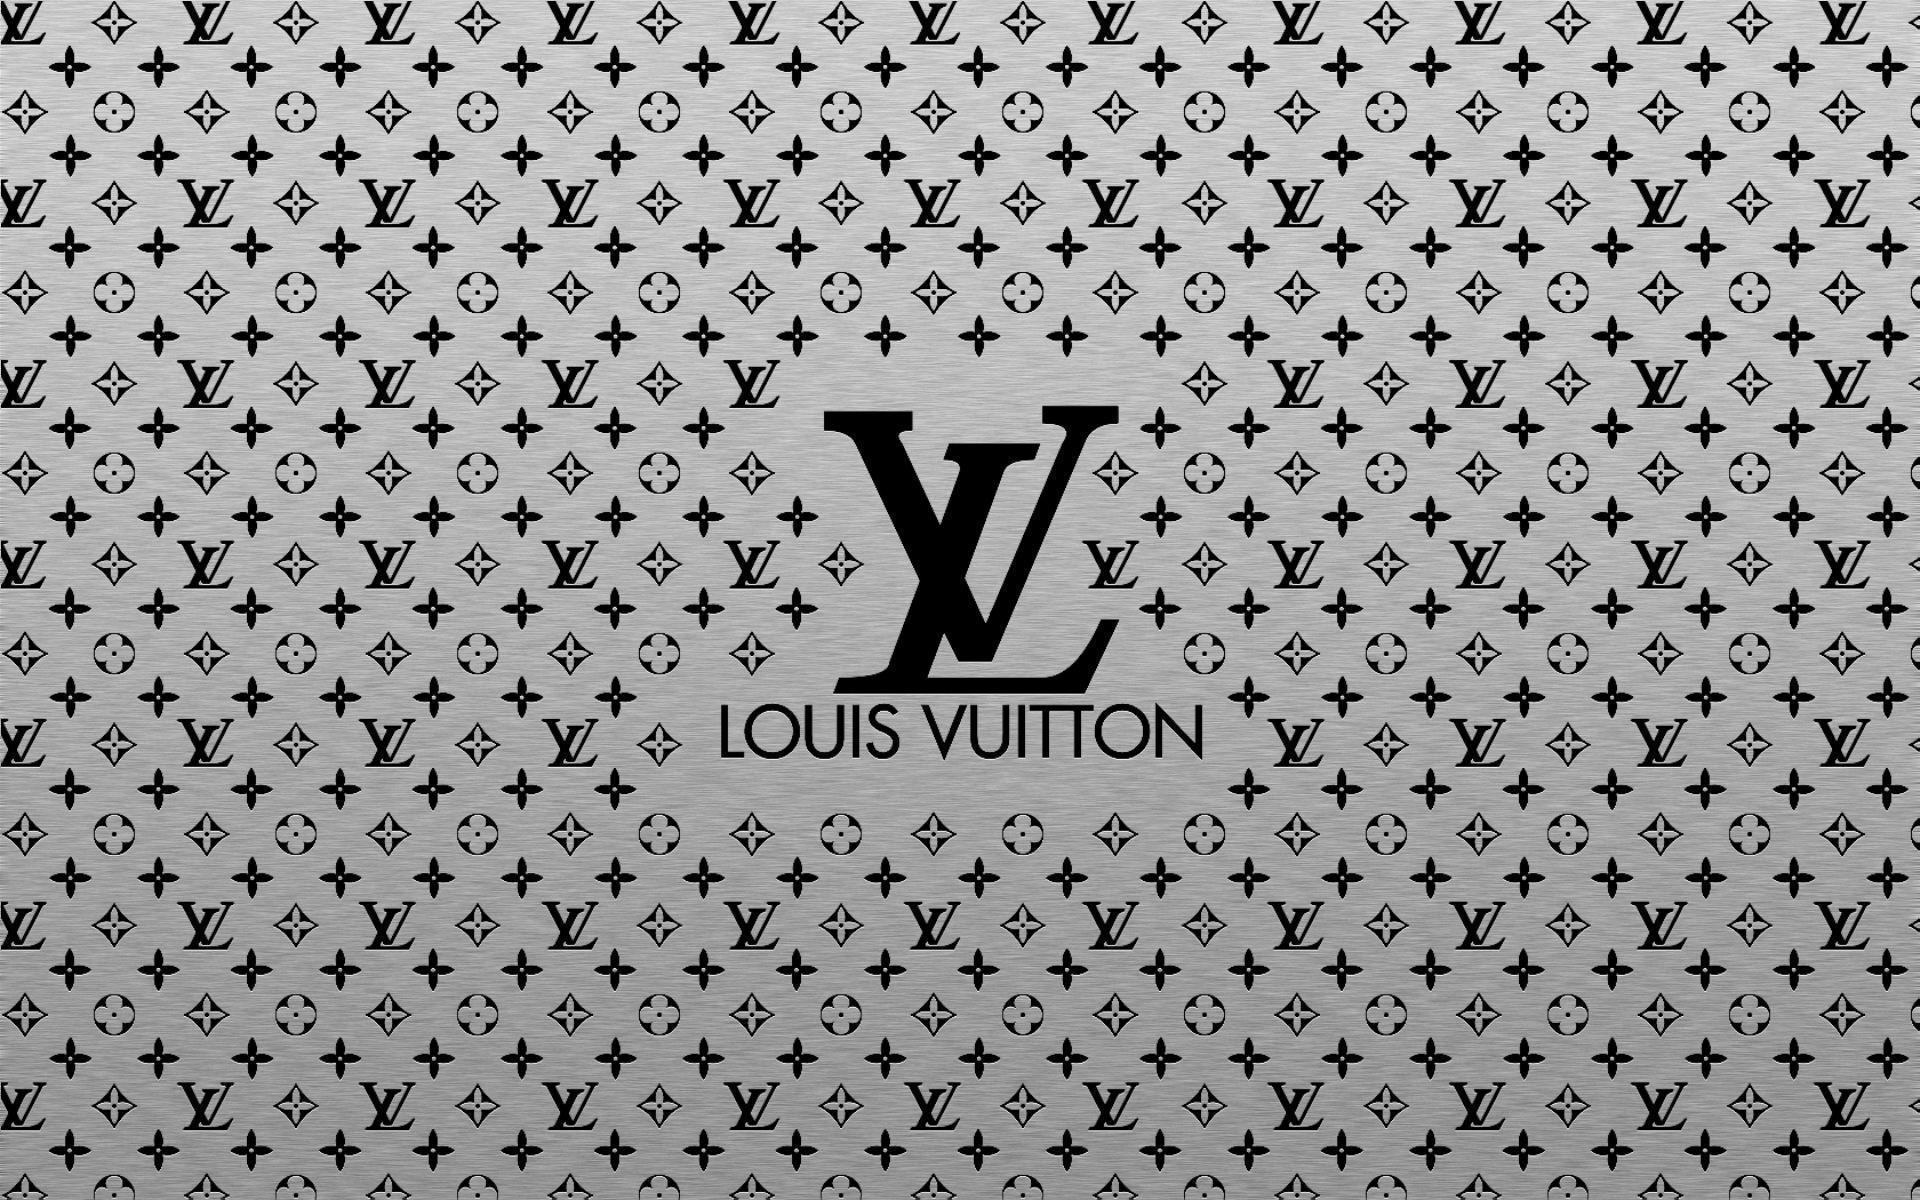 Louis Vuitton Aesthetic Wallpapers - Top Free Louis Vuitton